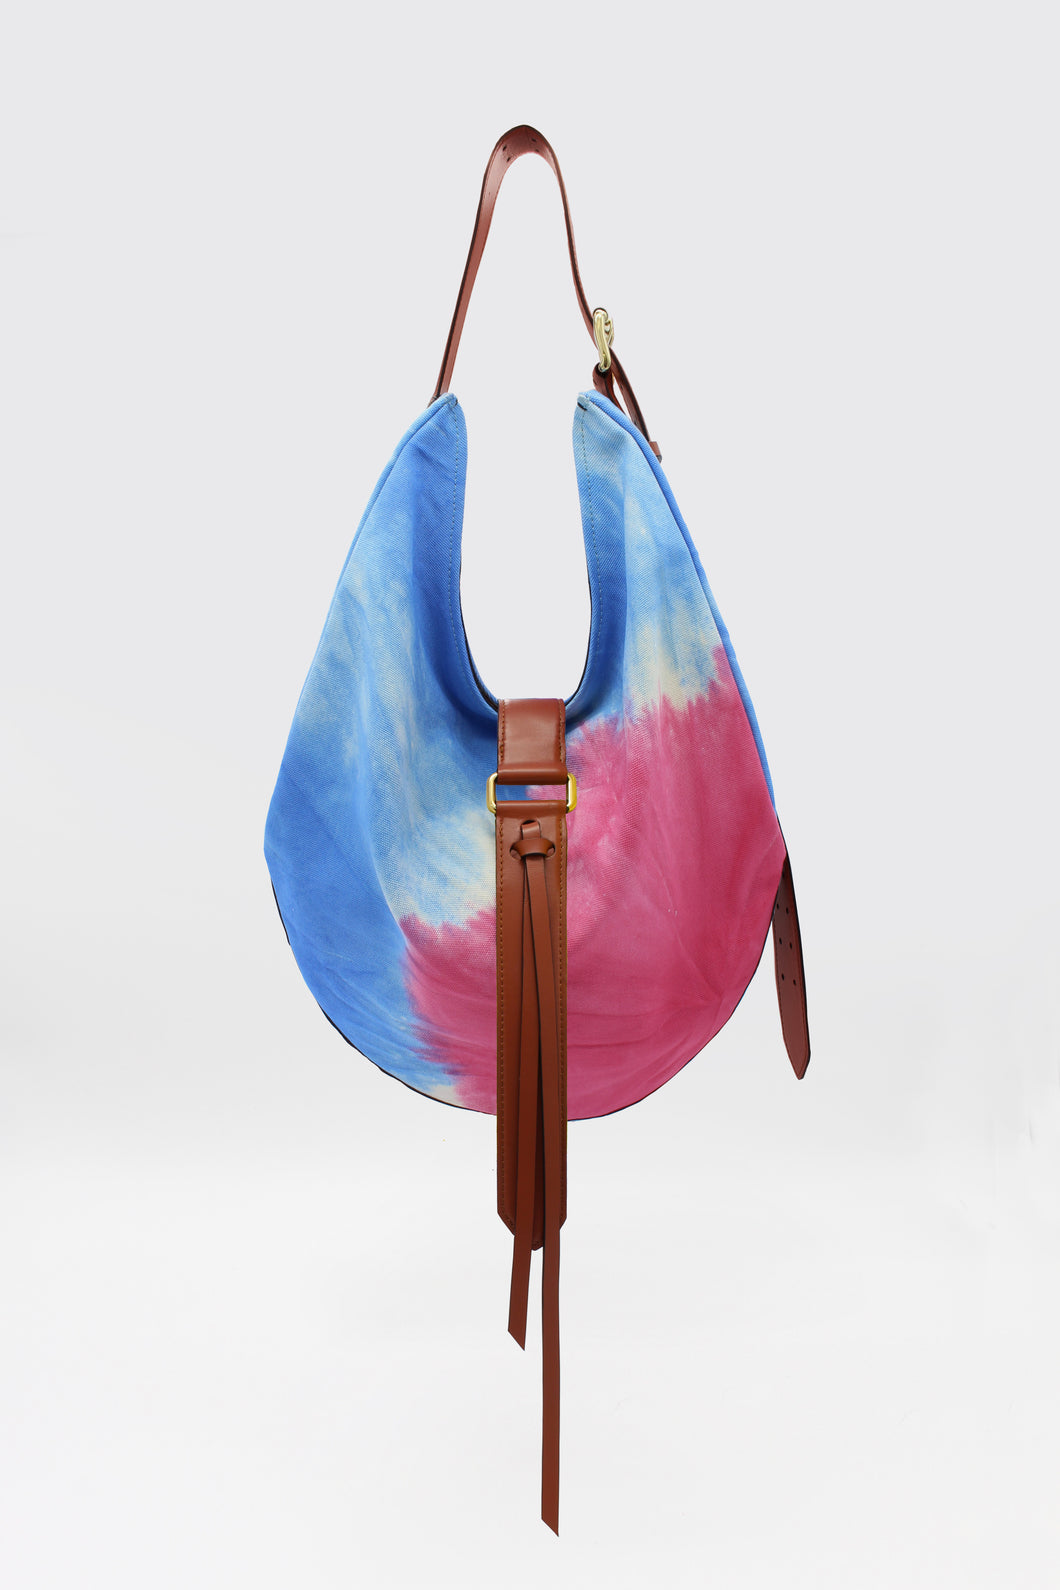 Sunset Bag Maxi Tie-dye Canvas blu+red